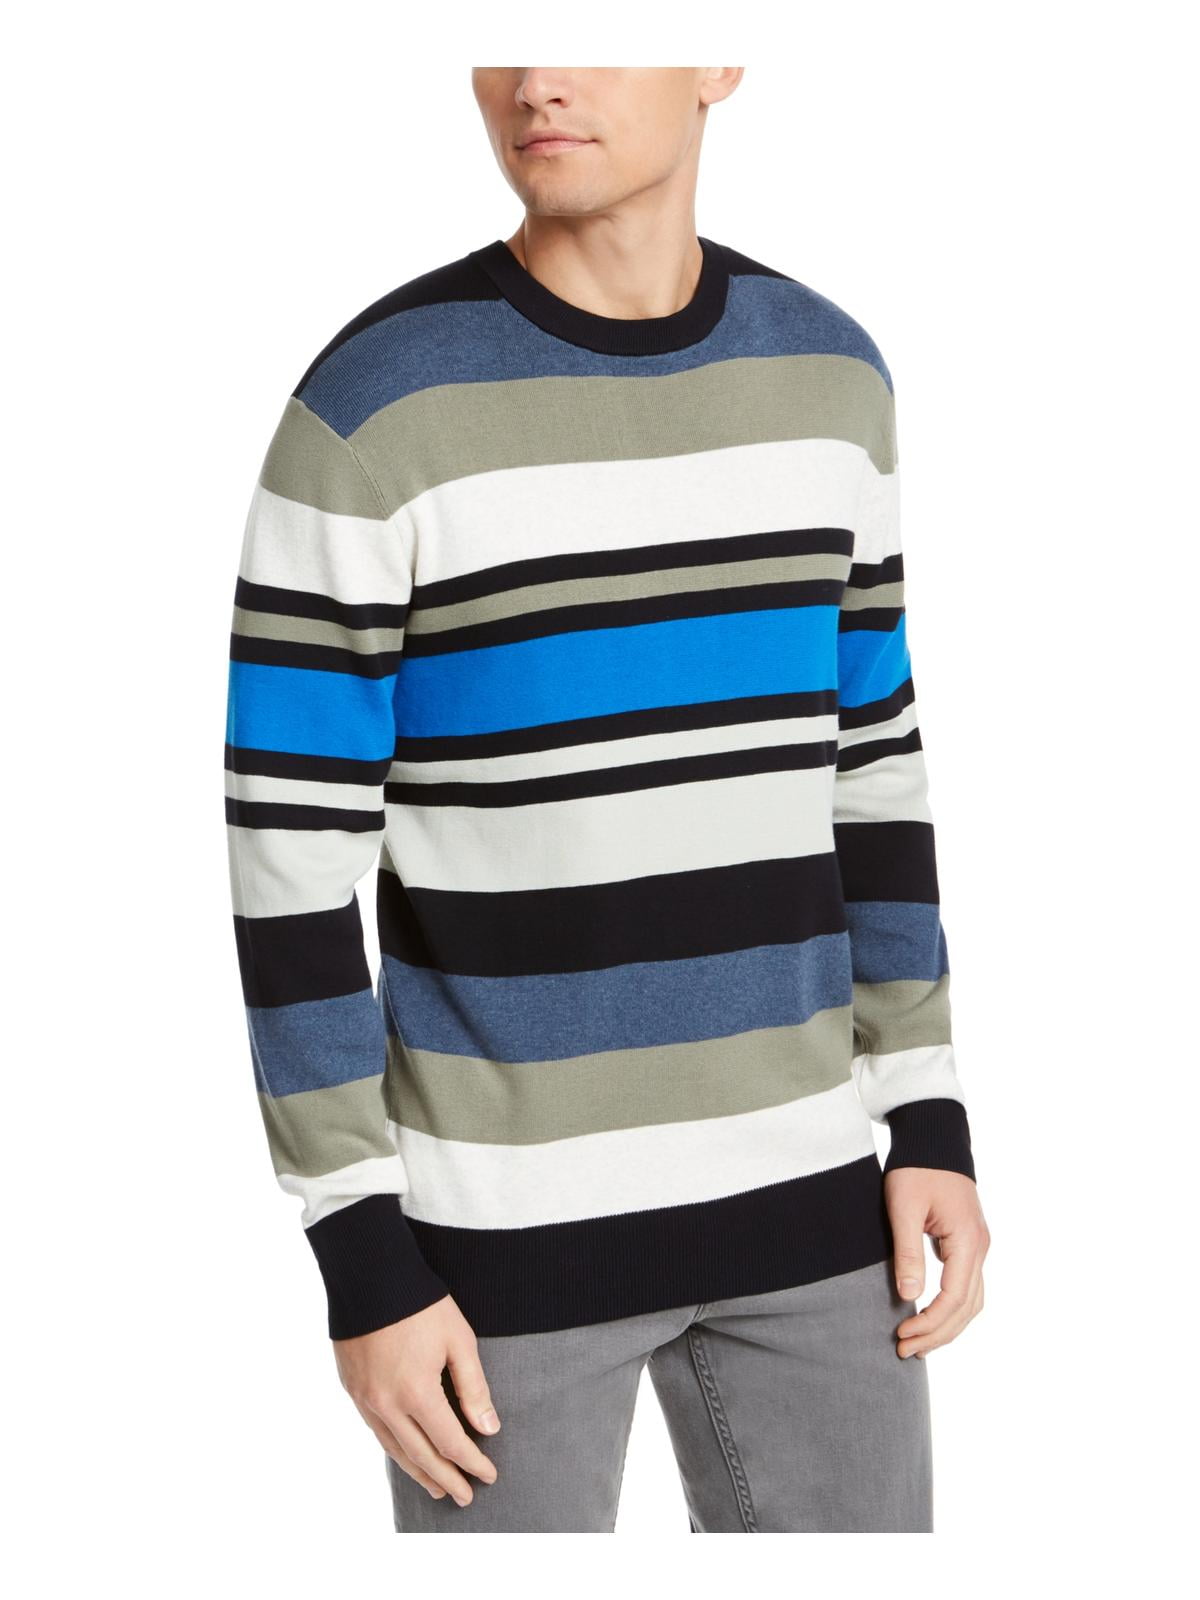 DKNY Mens Cotton Striped Sweater - Walmart.com